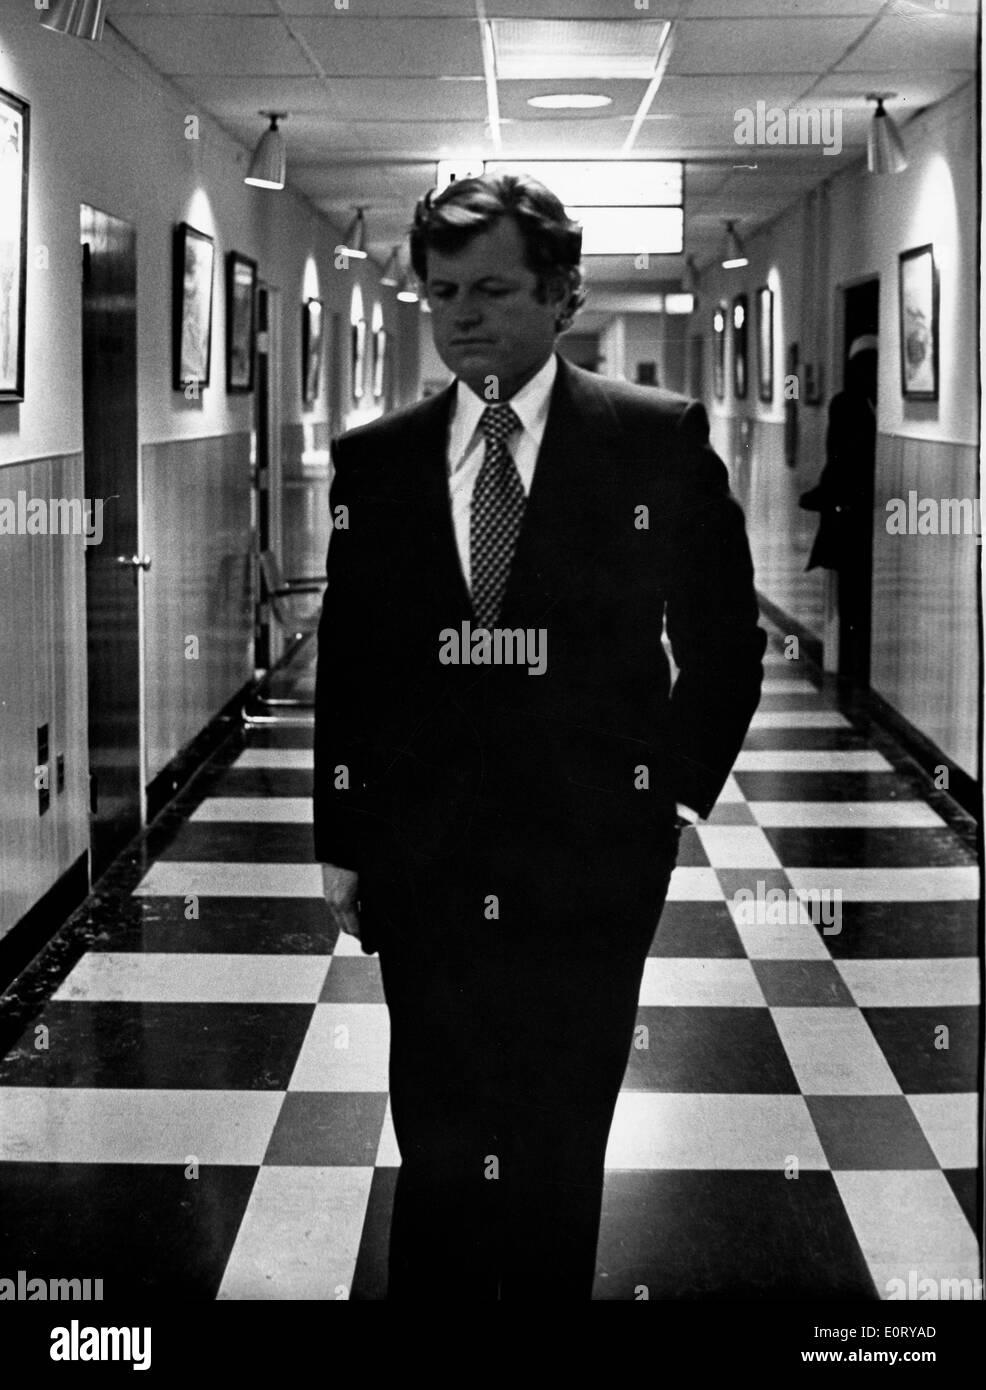 Senator Edward Kennedy in hospital hallway Stock Photo